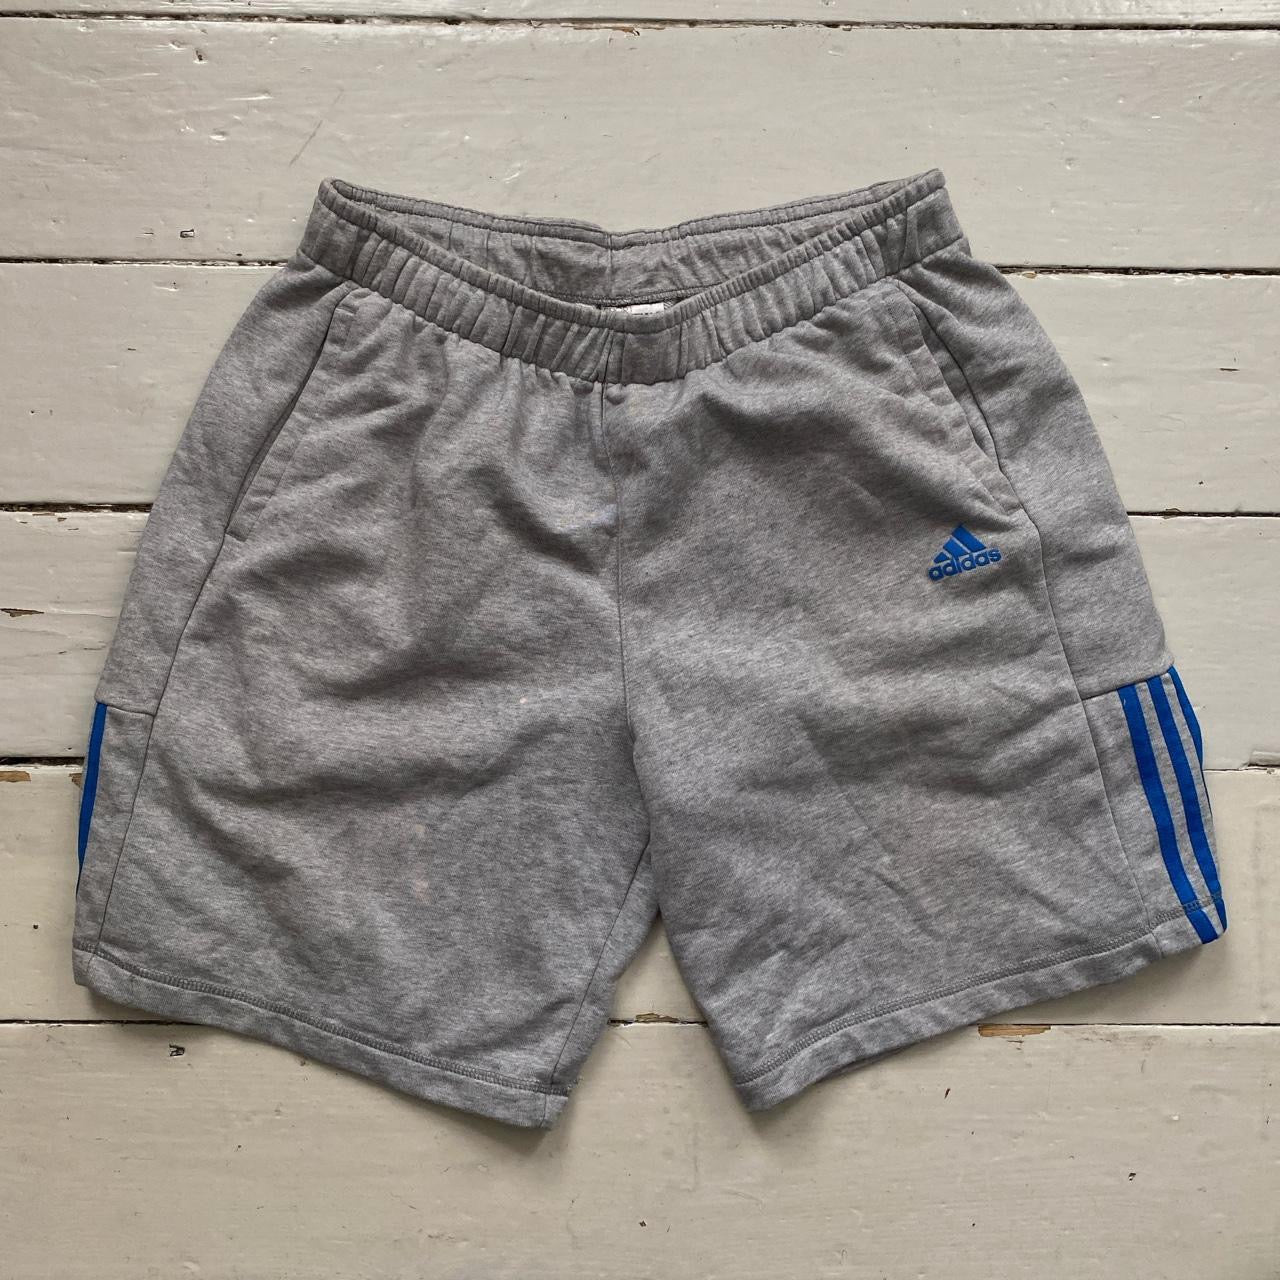 Adidas Grey and Blue Shorts (XL)